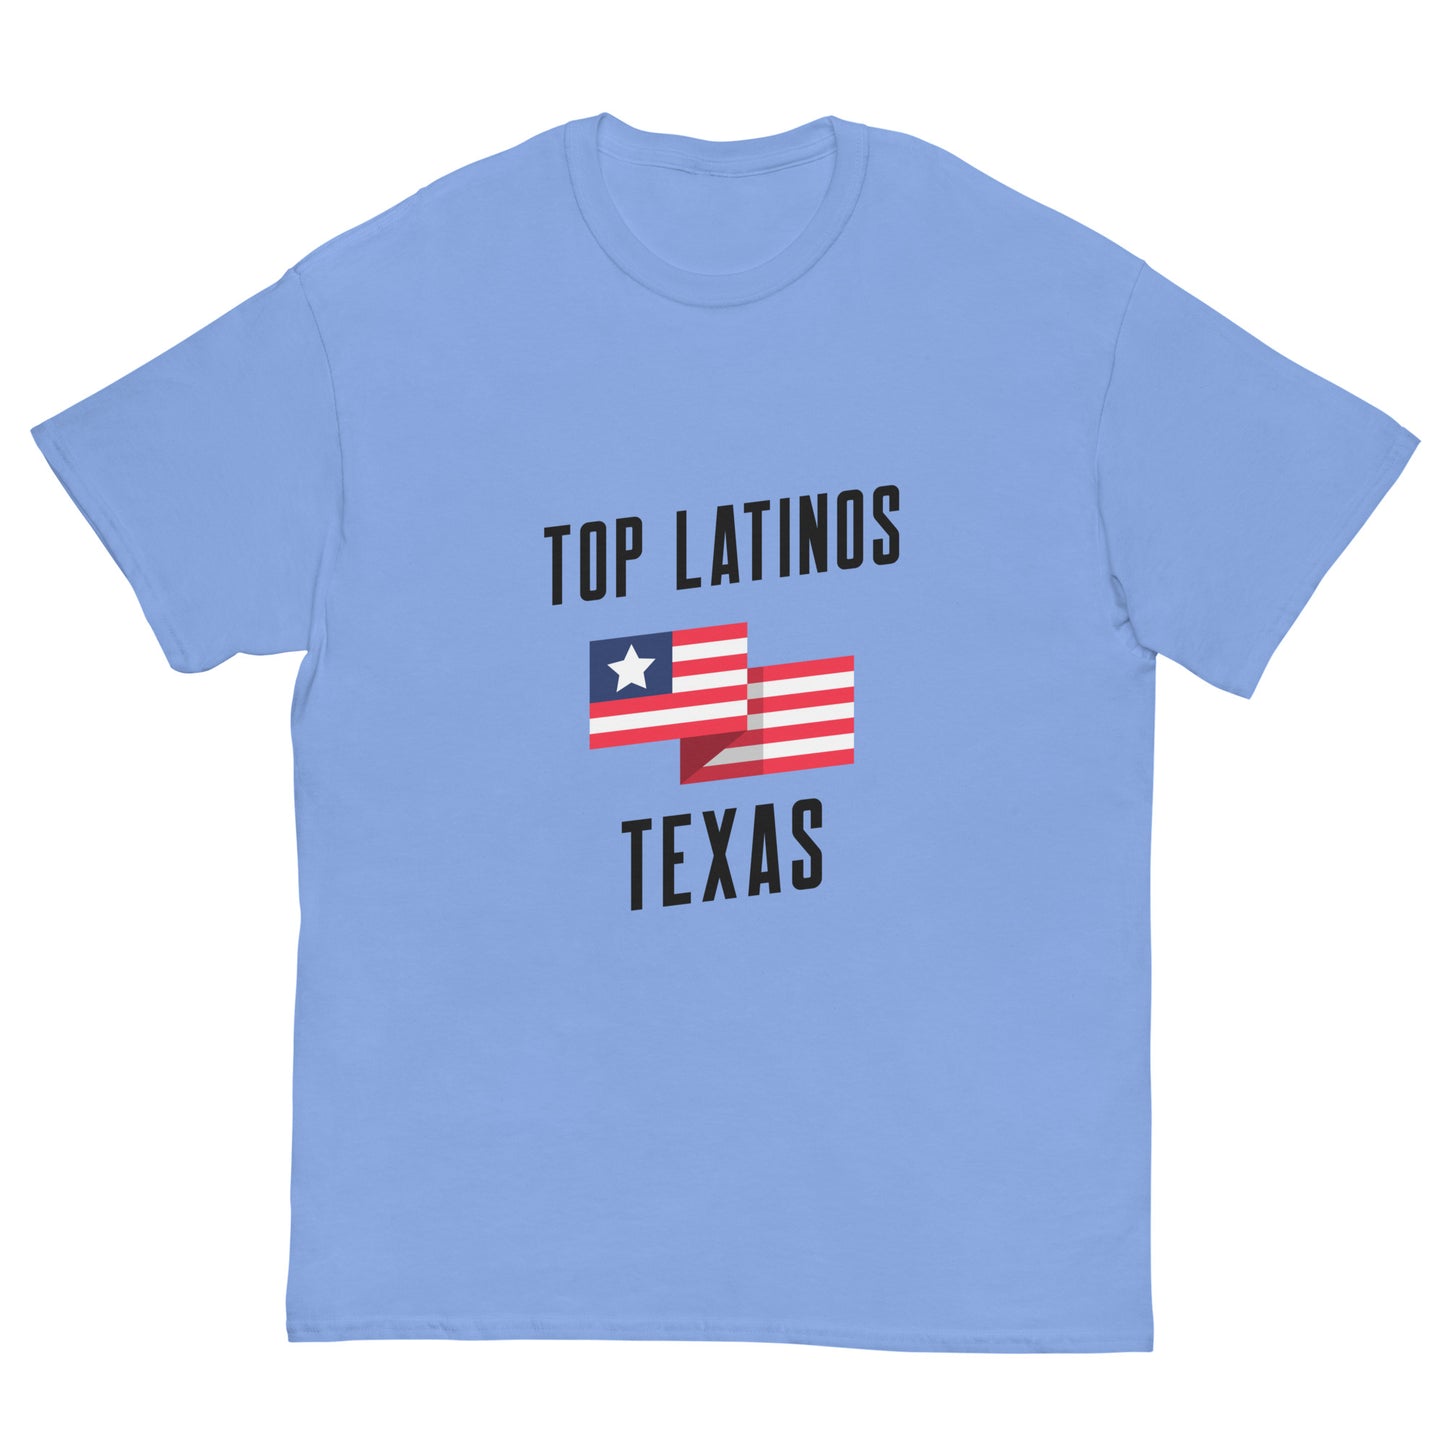 Top Latinos Texas classic tee